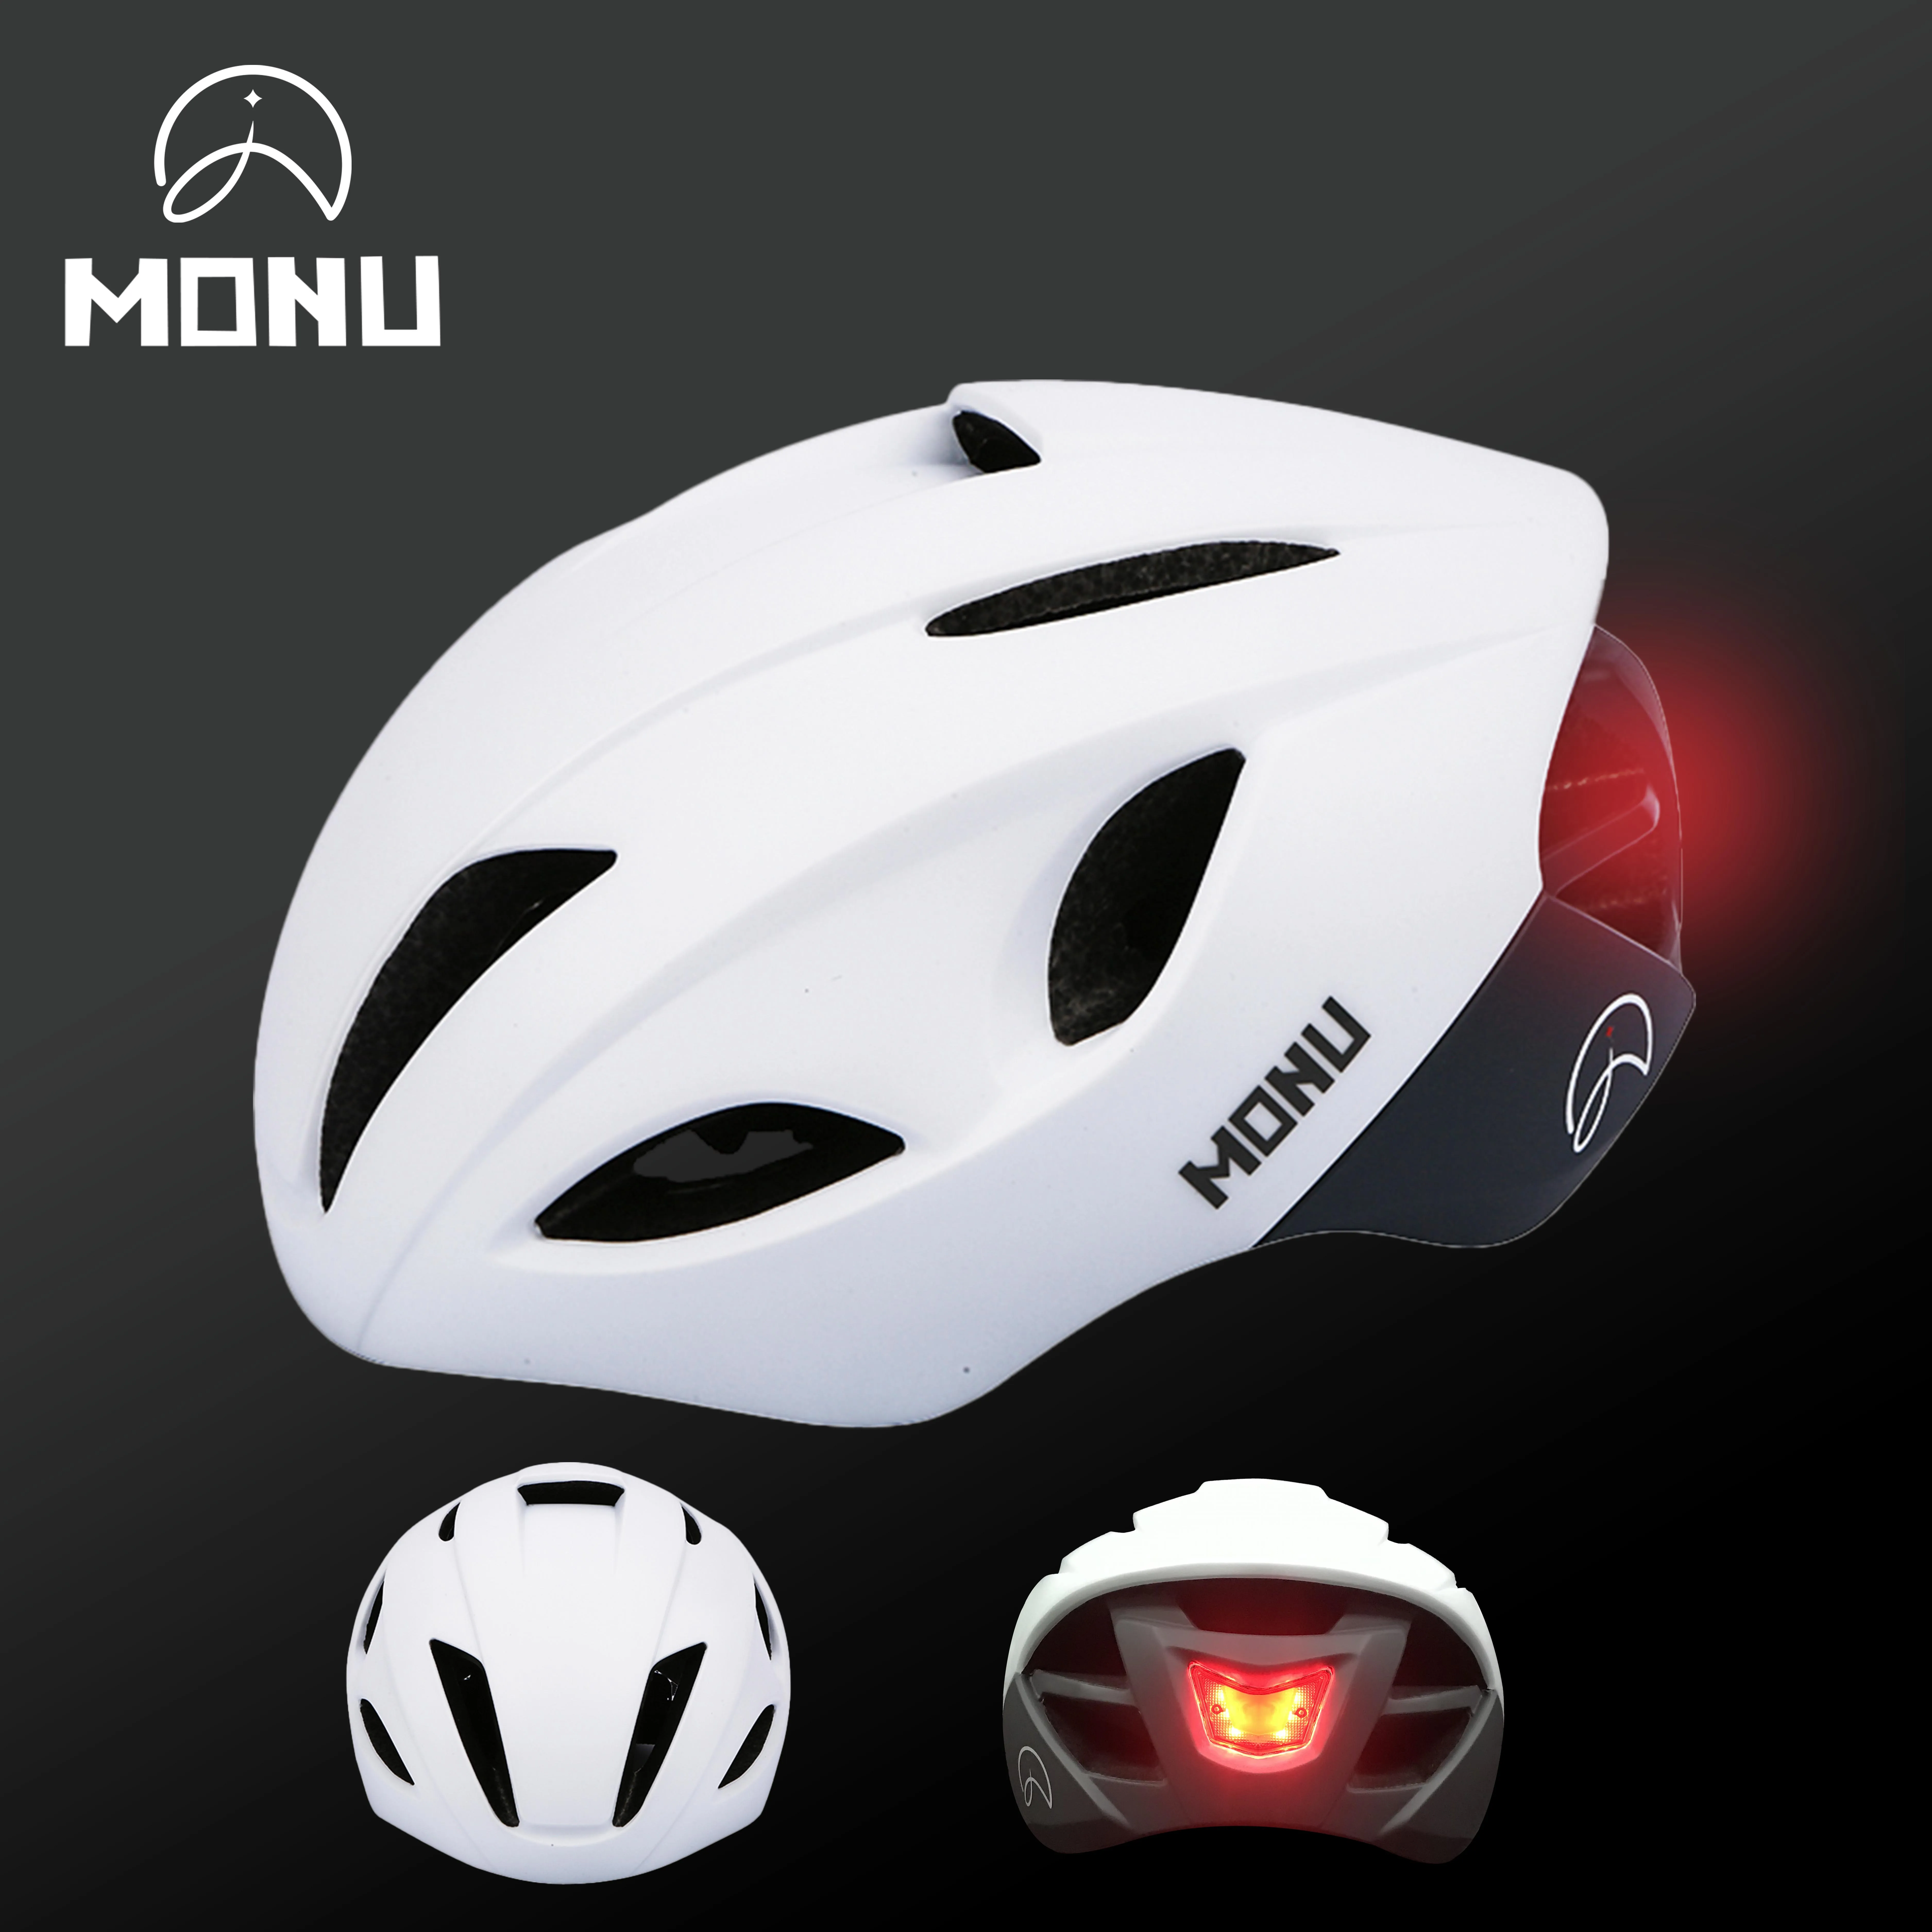 MONU Wholesale Custom City Bicycle Helmet for Adult Men With LED Light And Certifications Road Bike Helmet